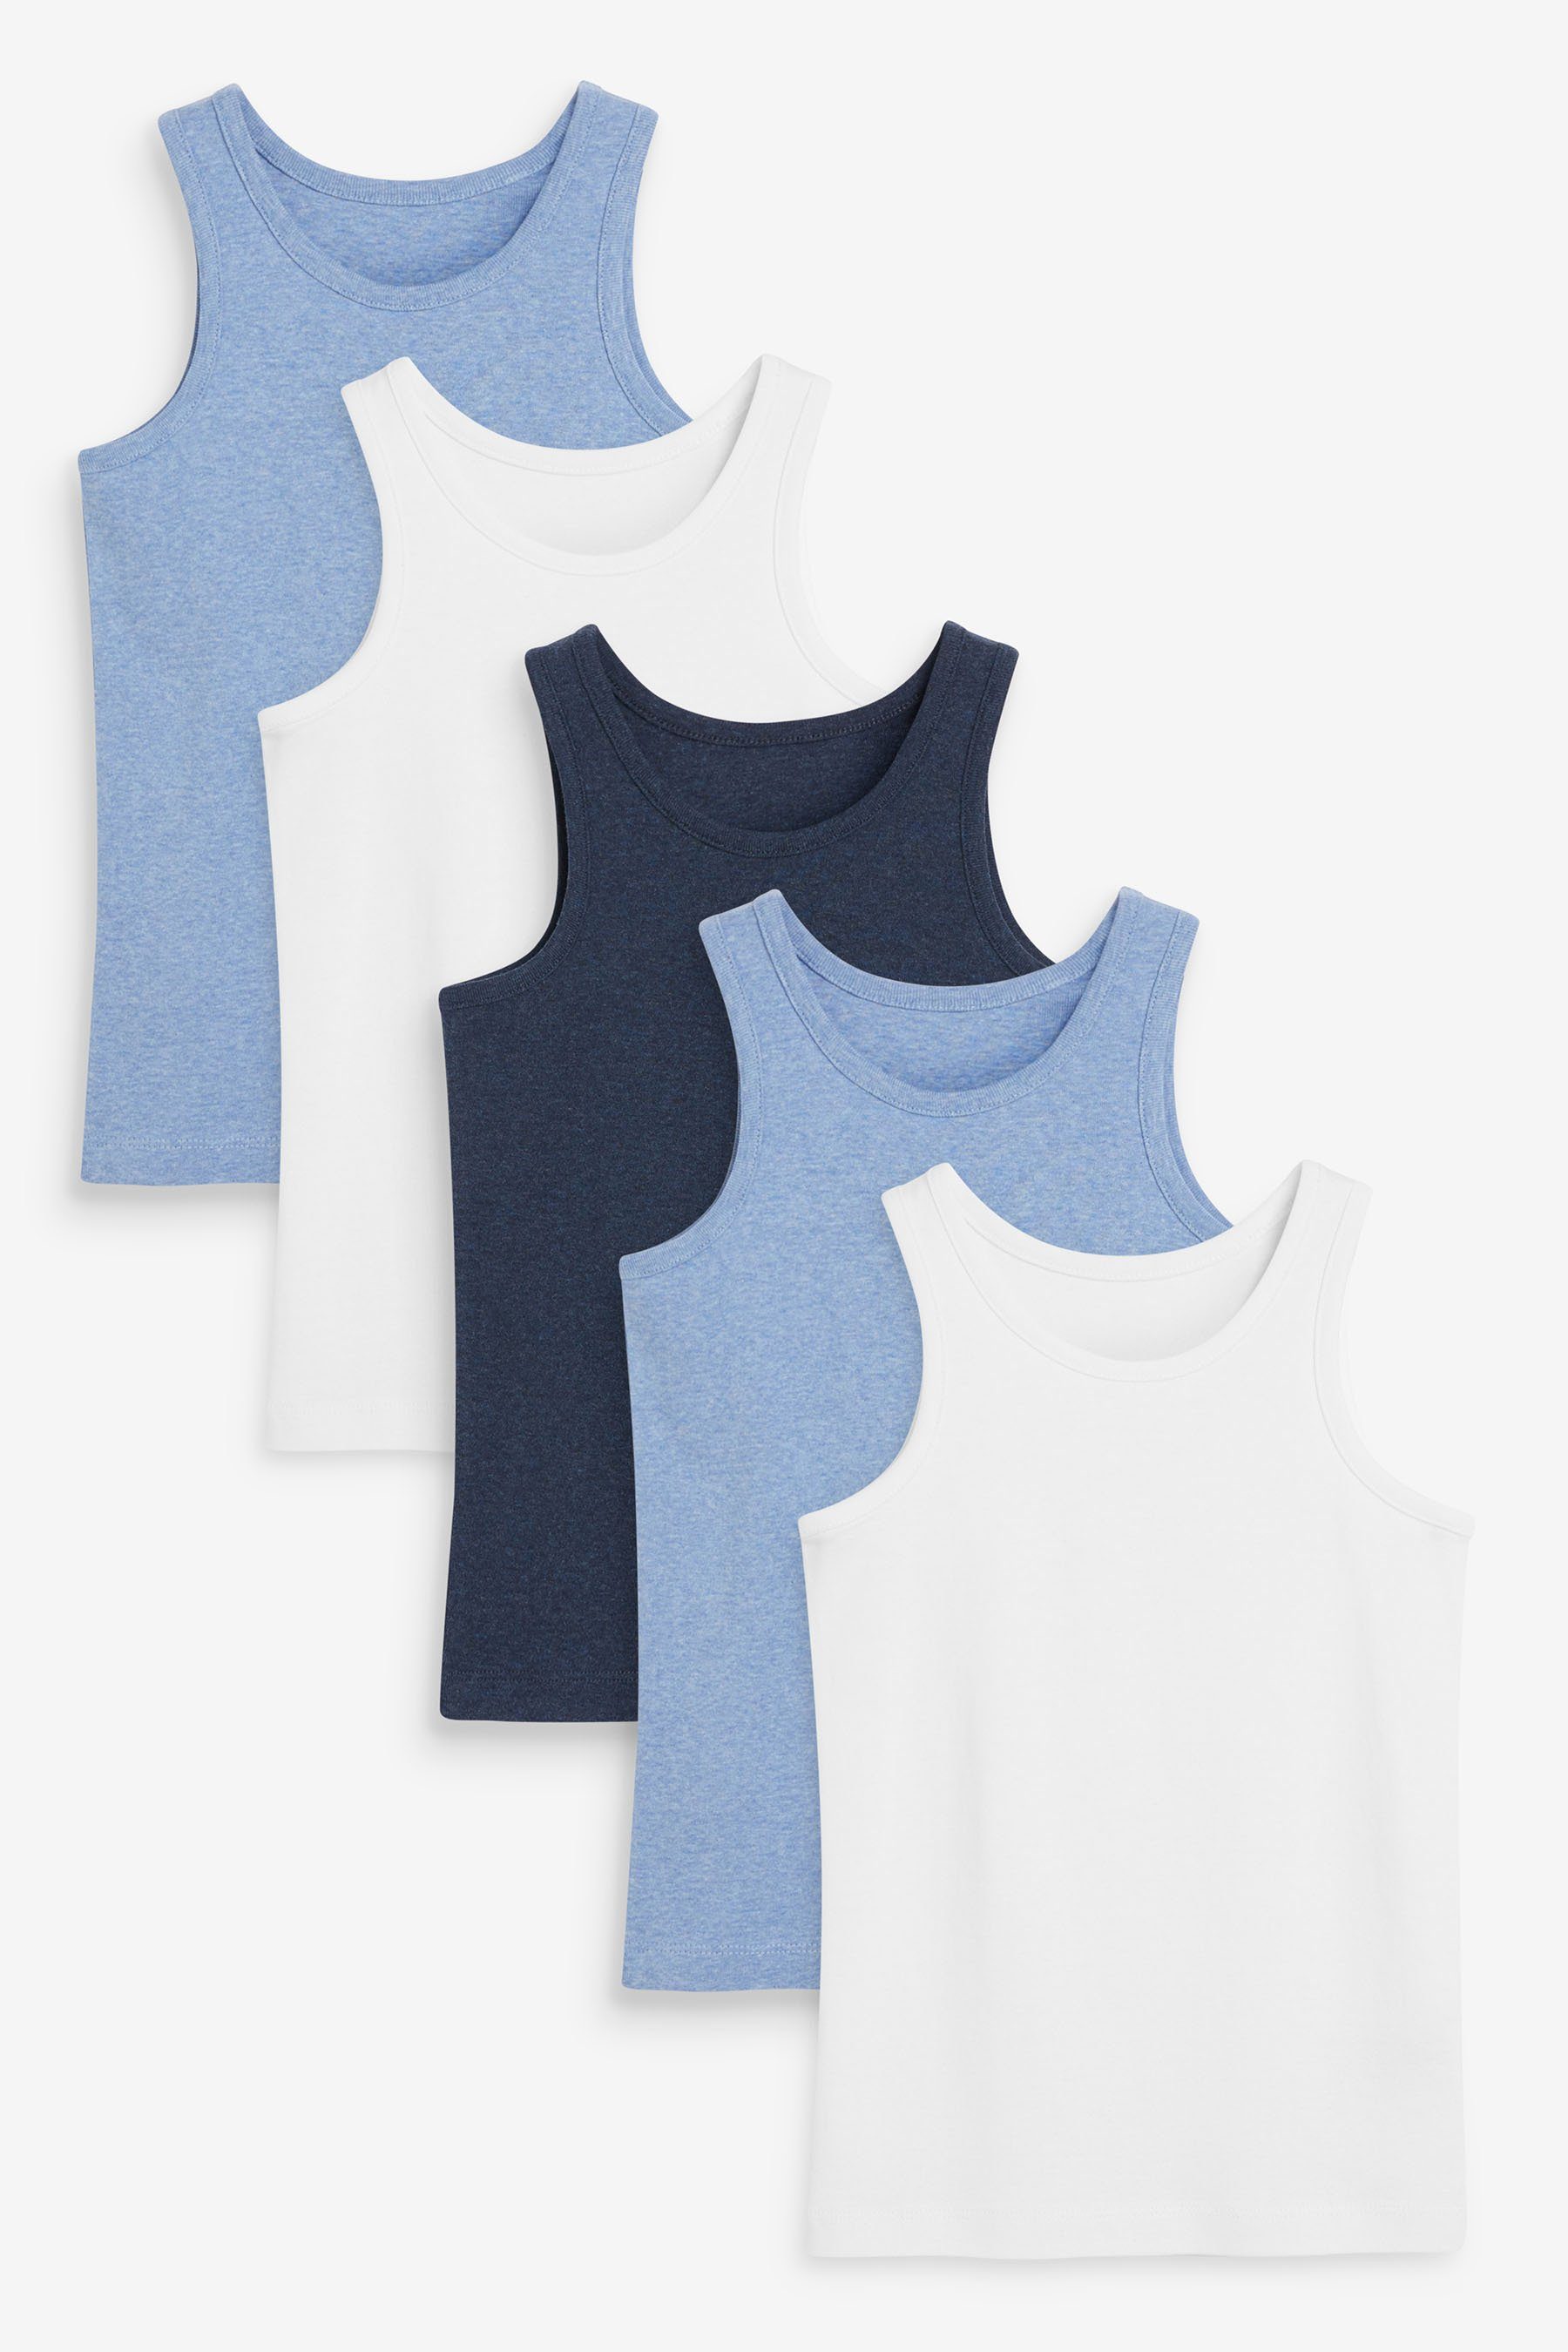 Next Unterhemd Unterhemden aus, 5er-Pack (5-St) Blue/Grey